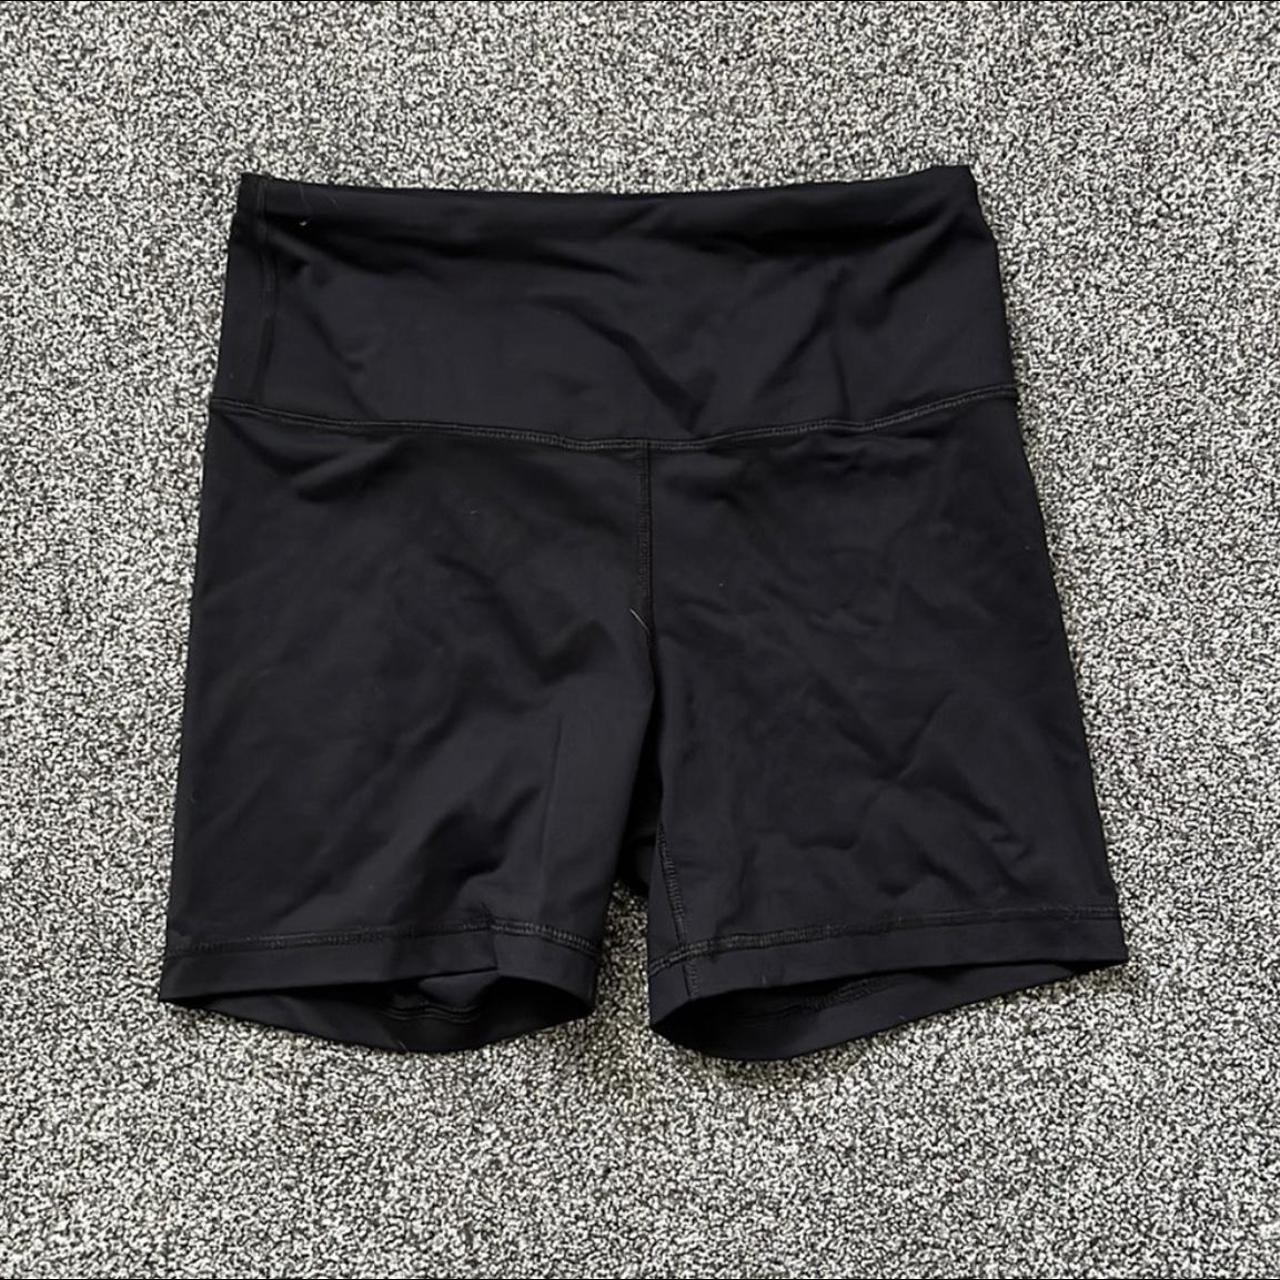 90 Degree Black Spandex Shorts size M, good condition - Depop